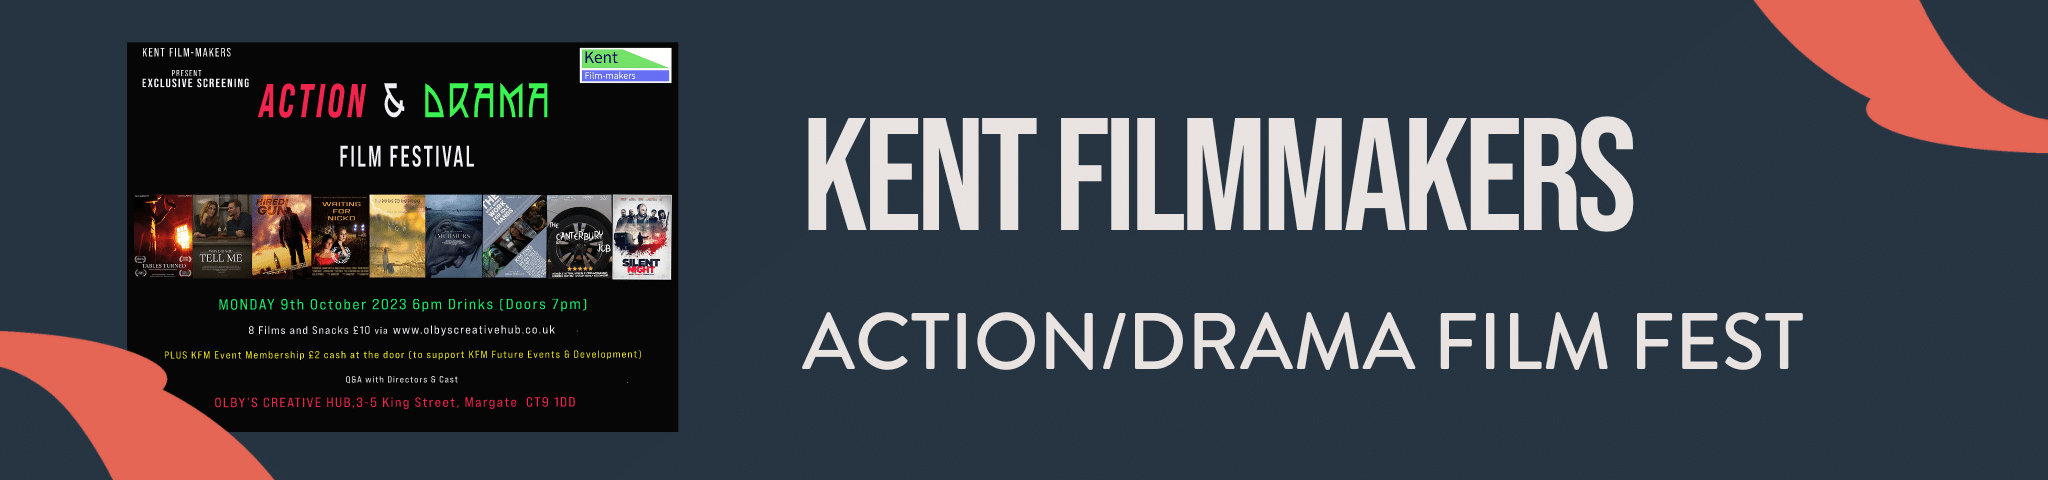 KENT FILMMAKERS ACTION & DRAMA FILM FEST – 9TH OCTOBER 2023